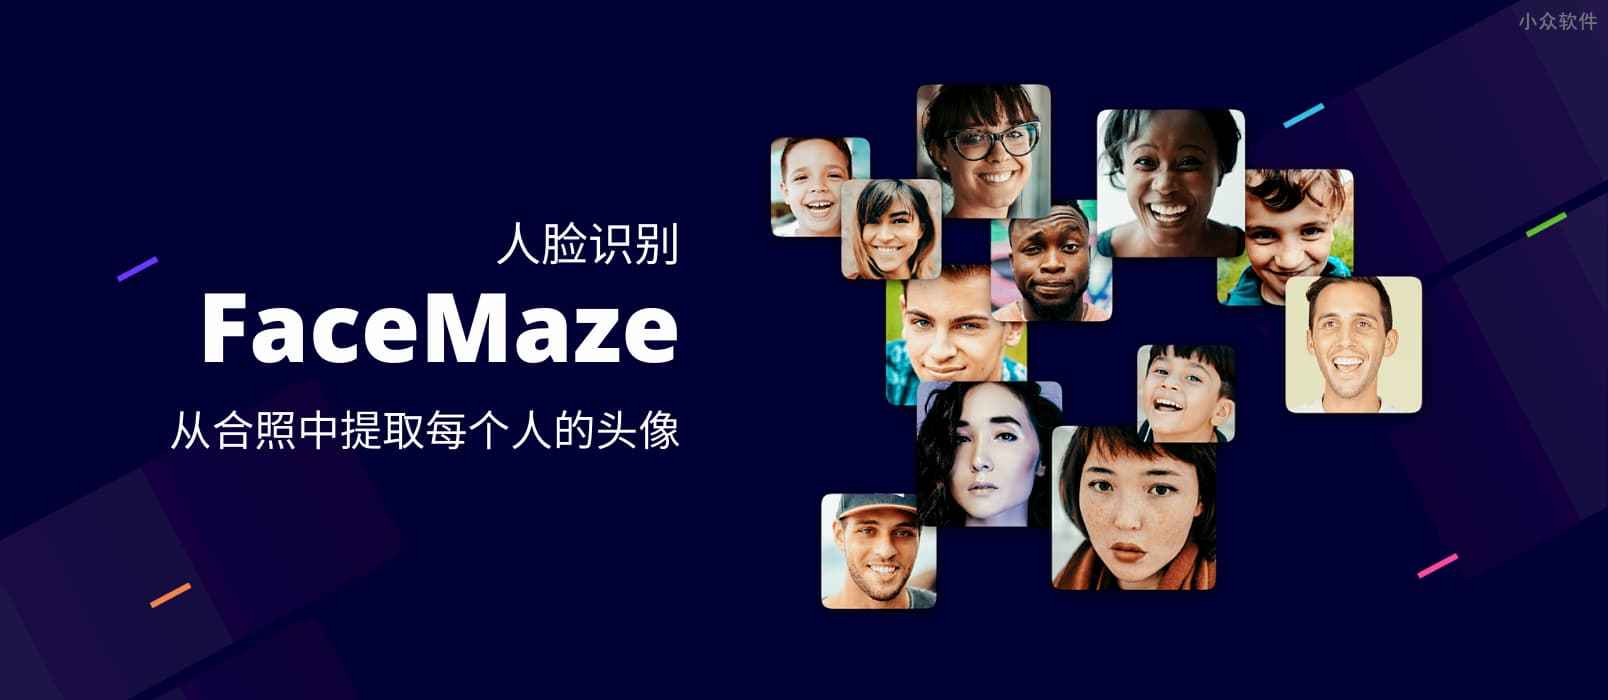 FaceMaze – 人脸识别，从合照中提取每个人的人脸头像